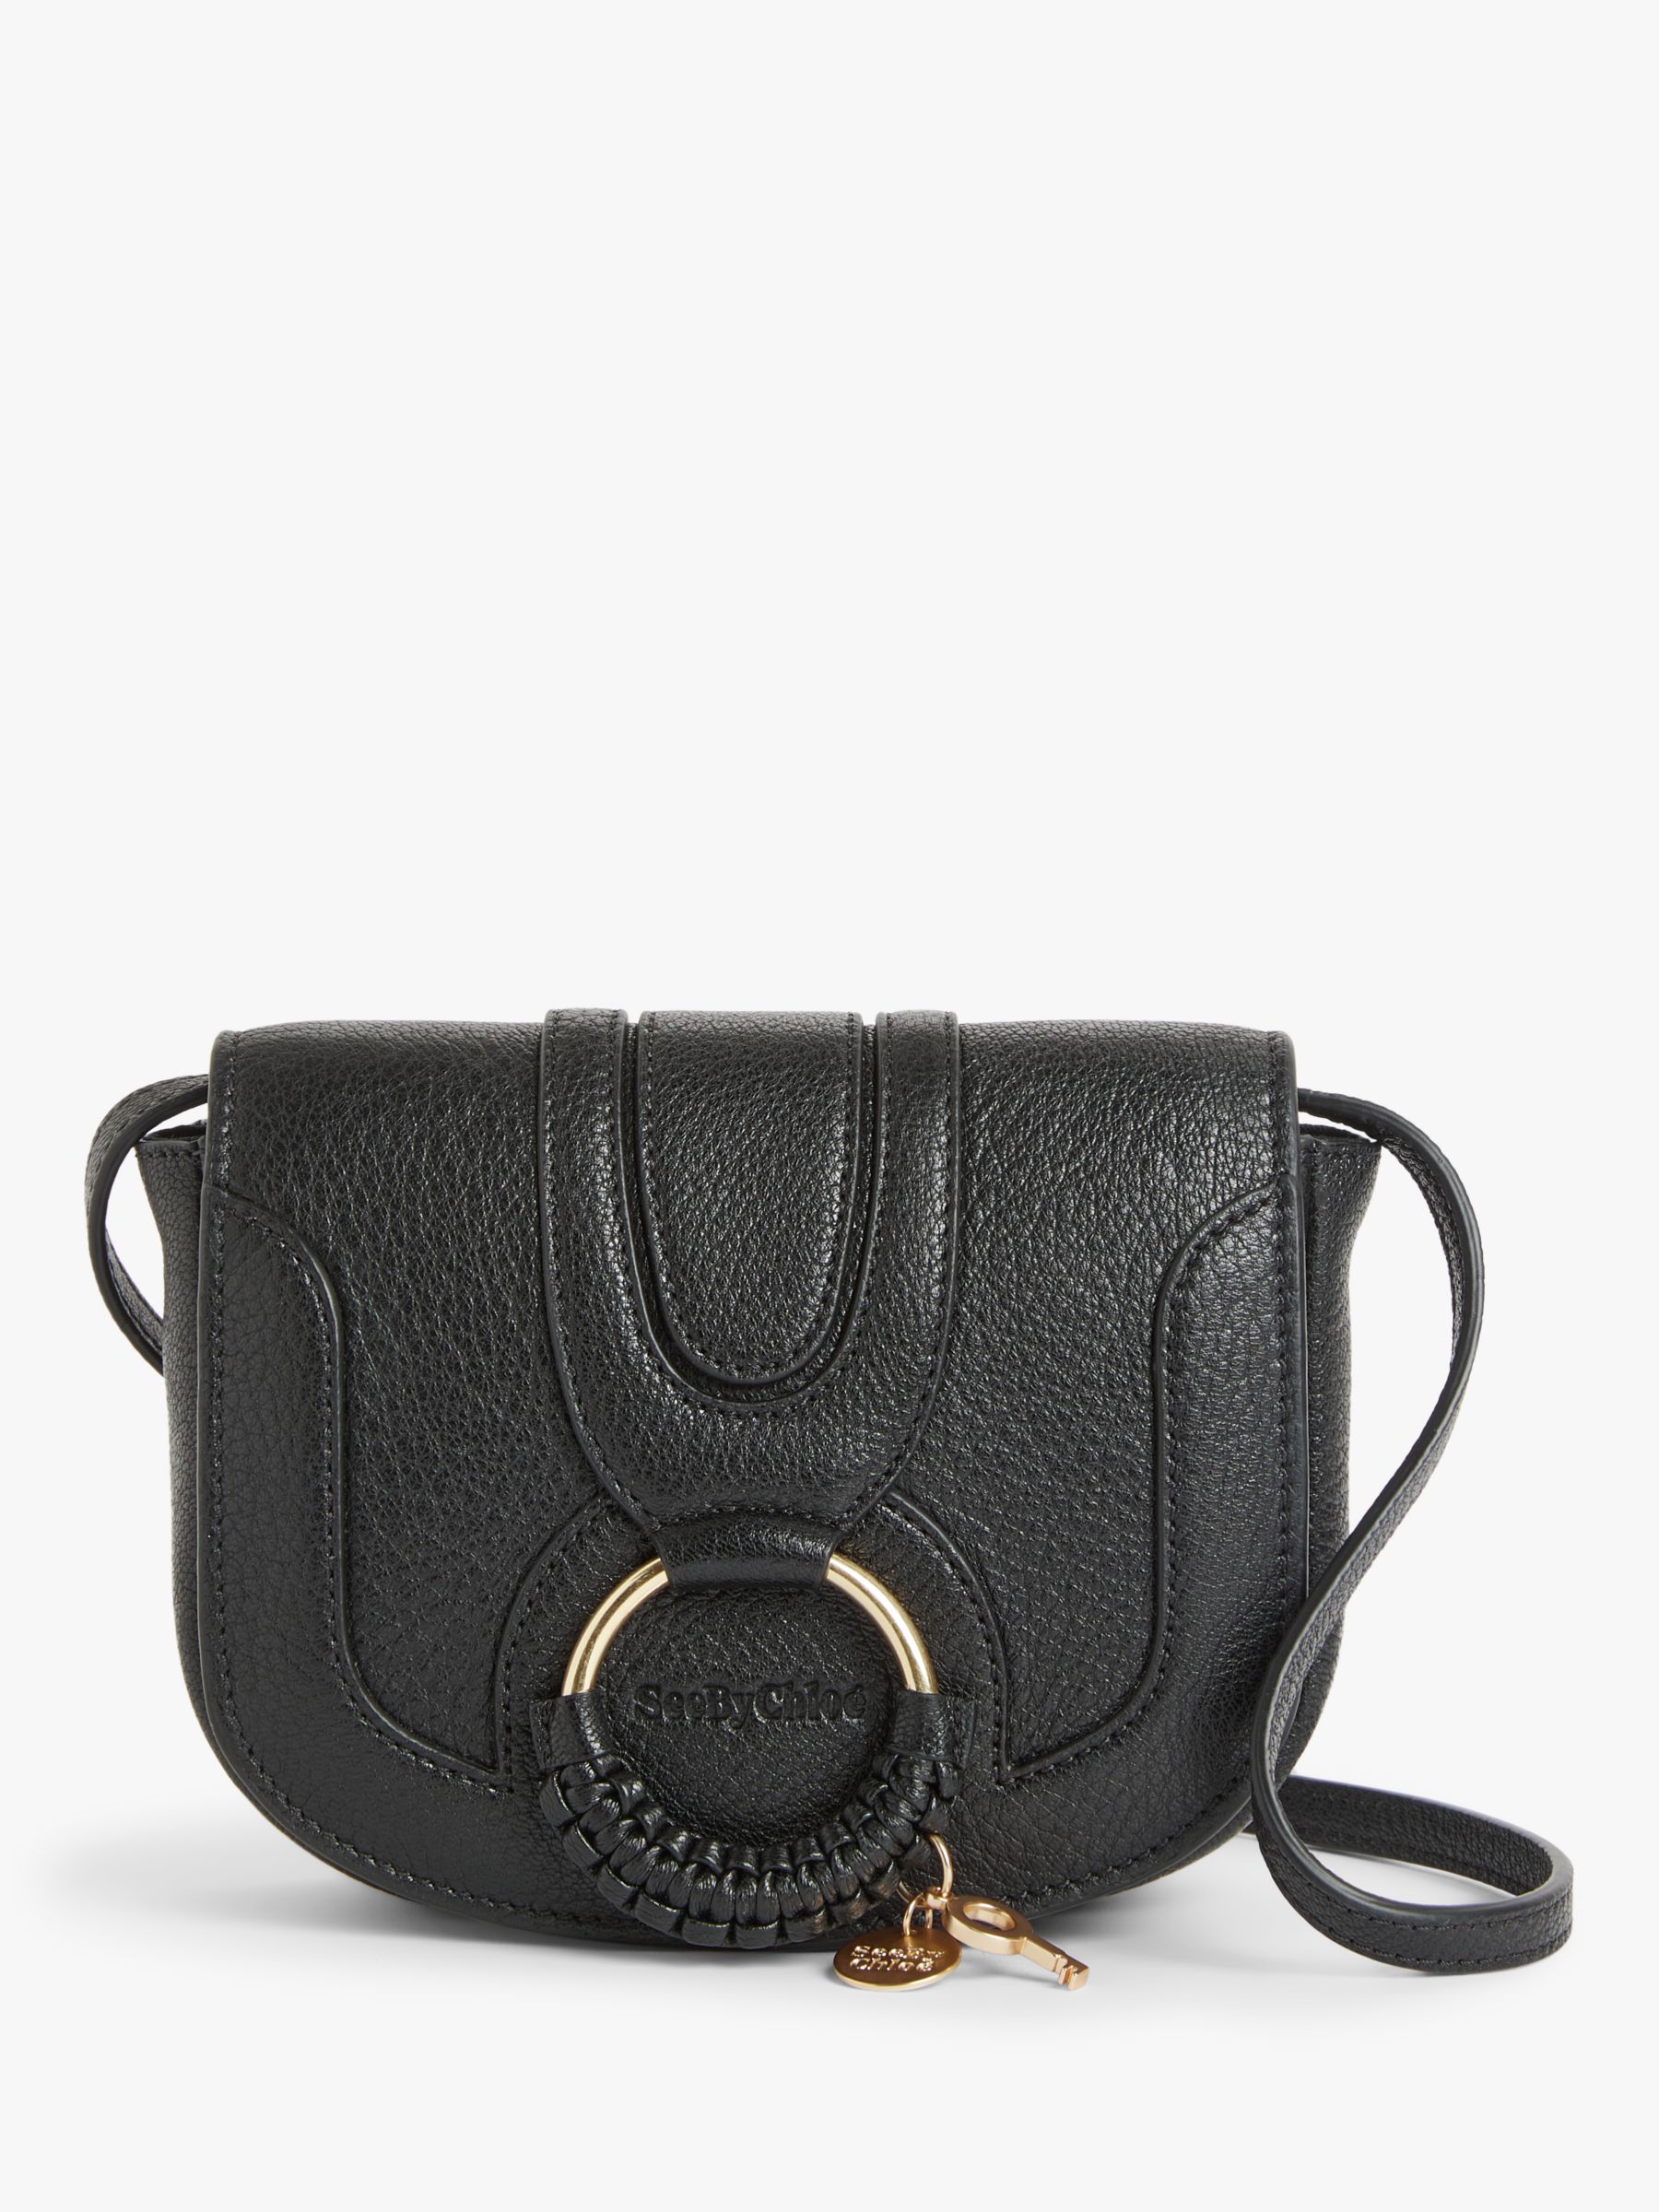 See by Chloe Hana Mini Bag Black One Size: Handbags